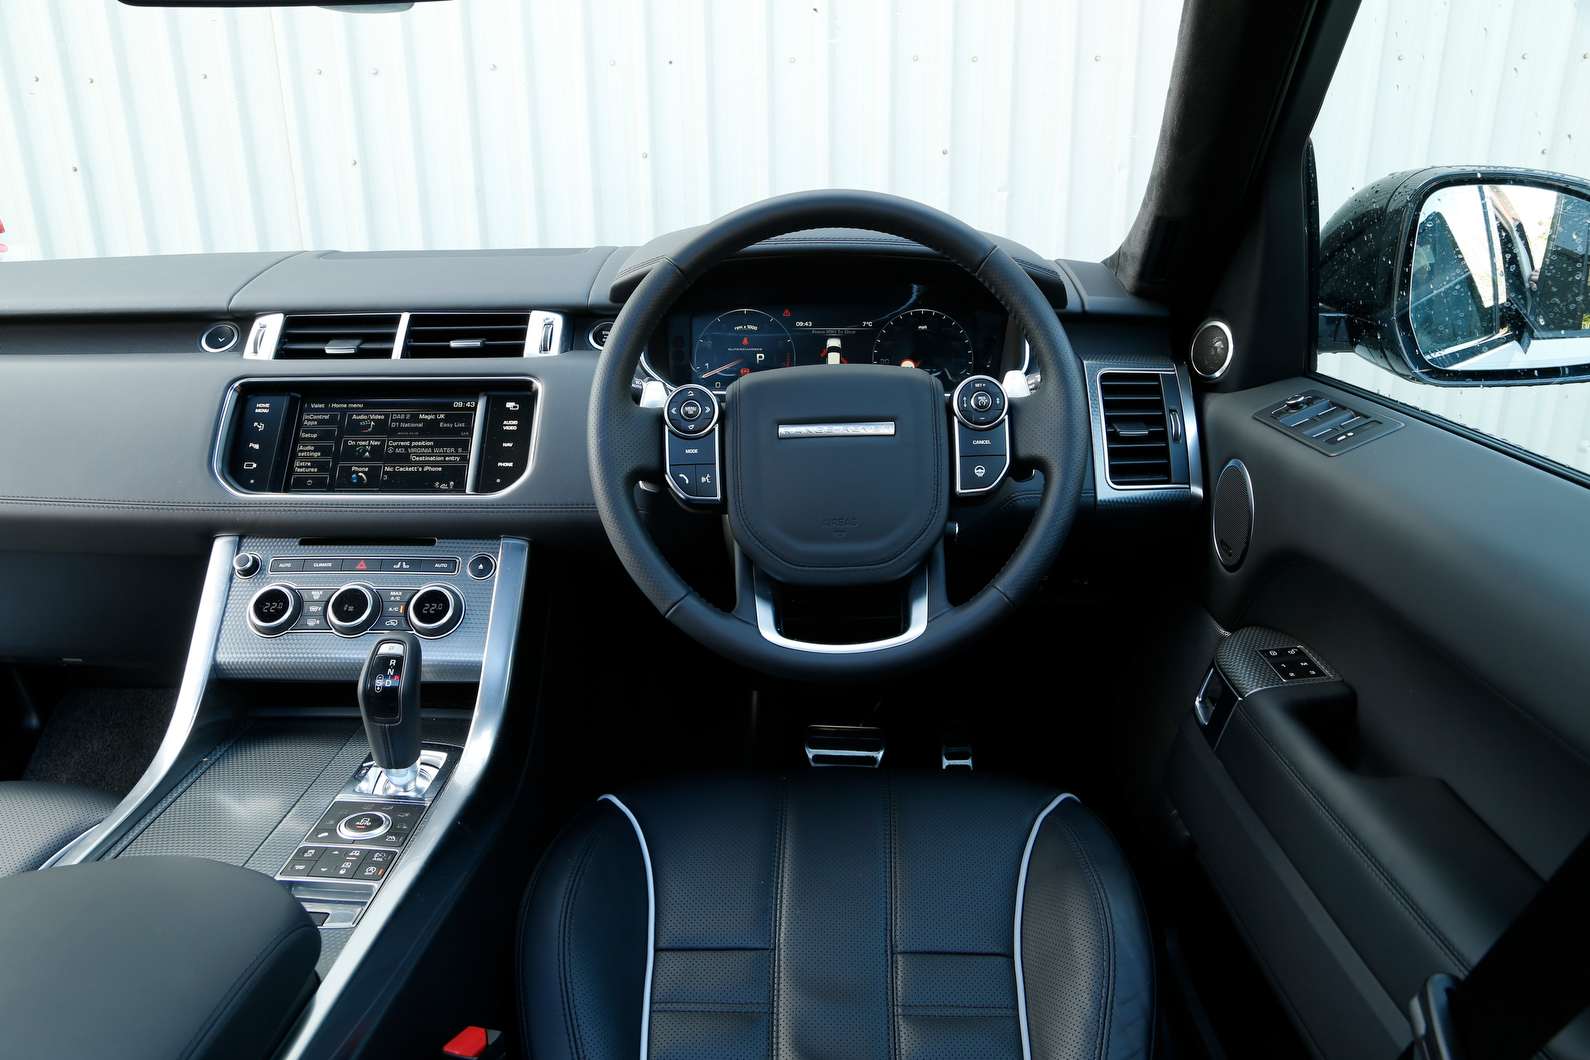 Range Rover SVR dashboard